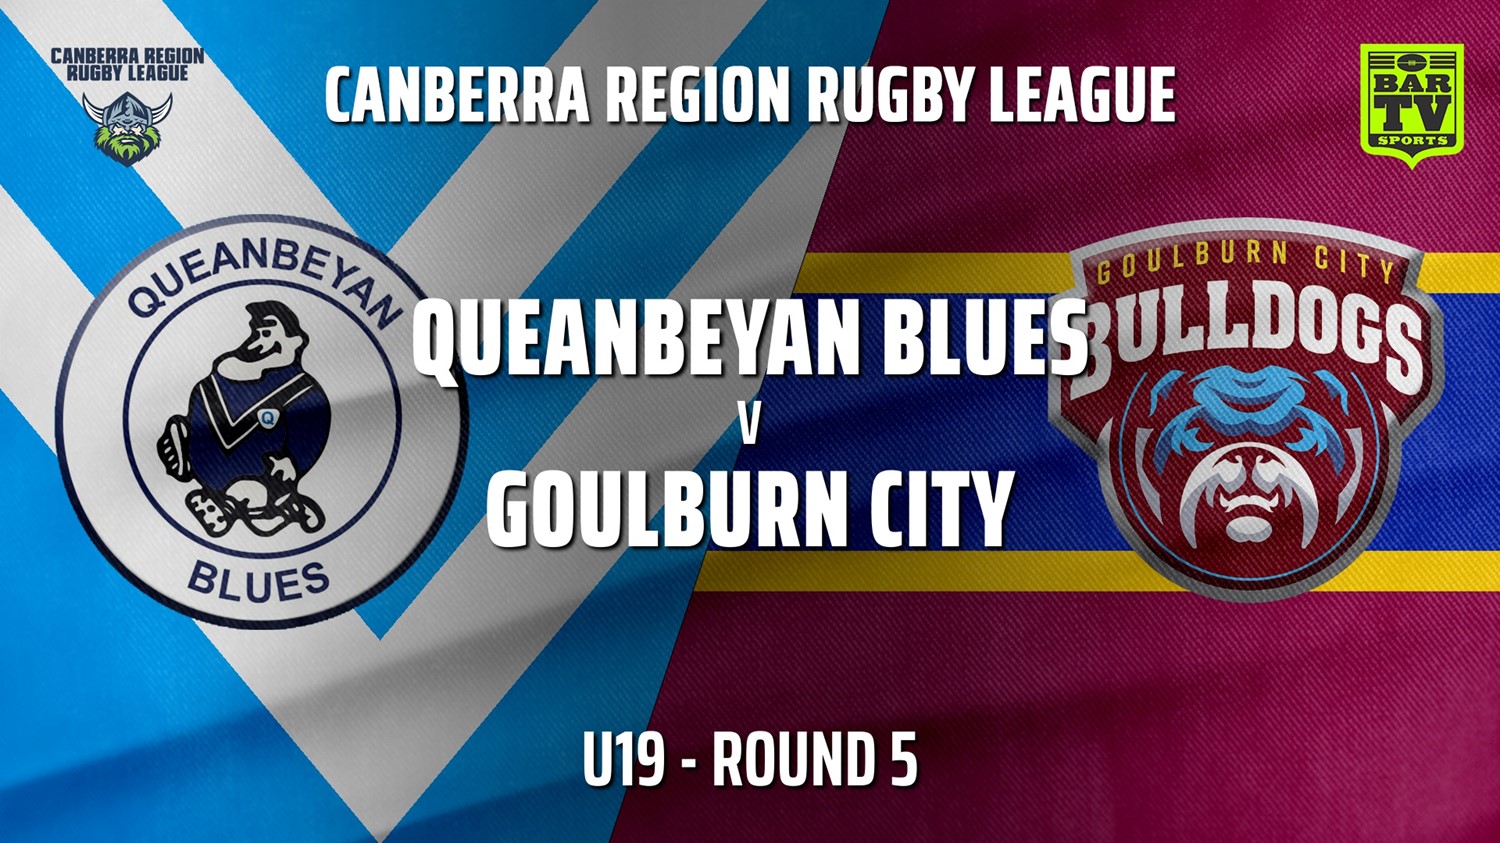 210529-CRRL Round 5 - U19 - Queanbeyan Blues v Goulburn City Bulldogs Slate Image